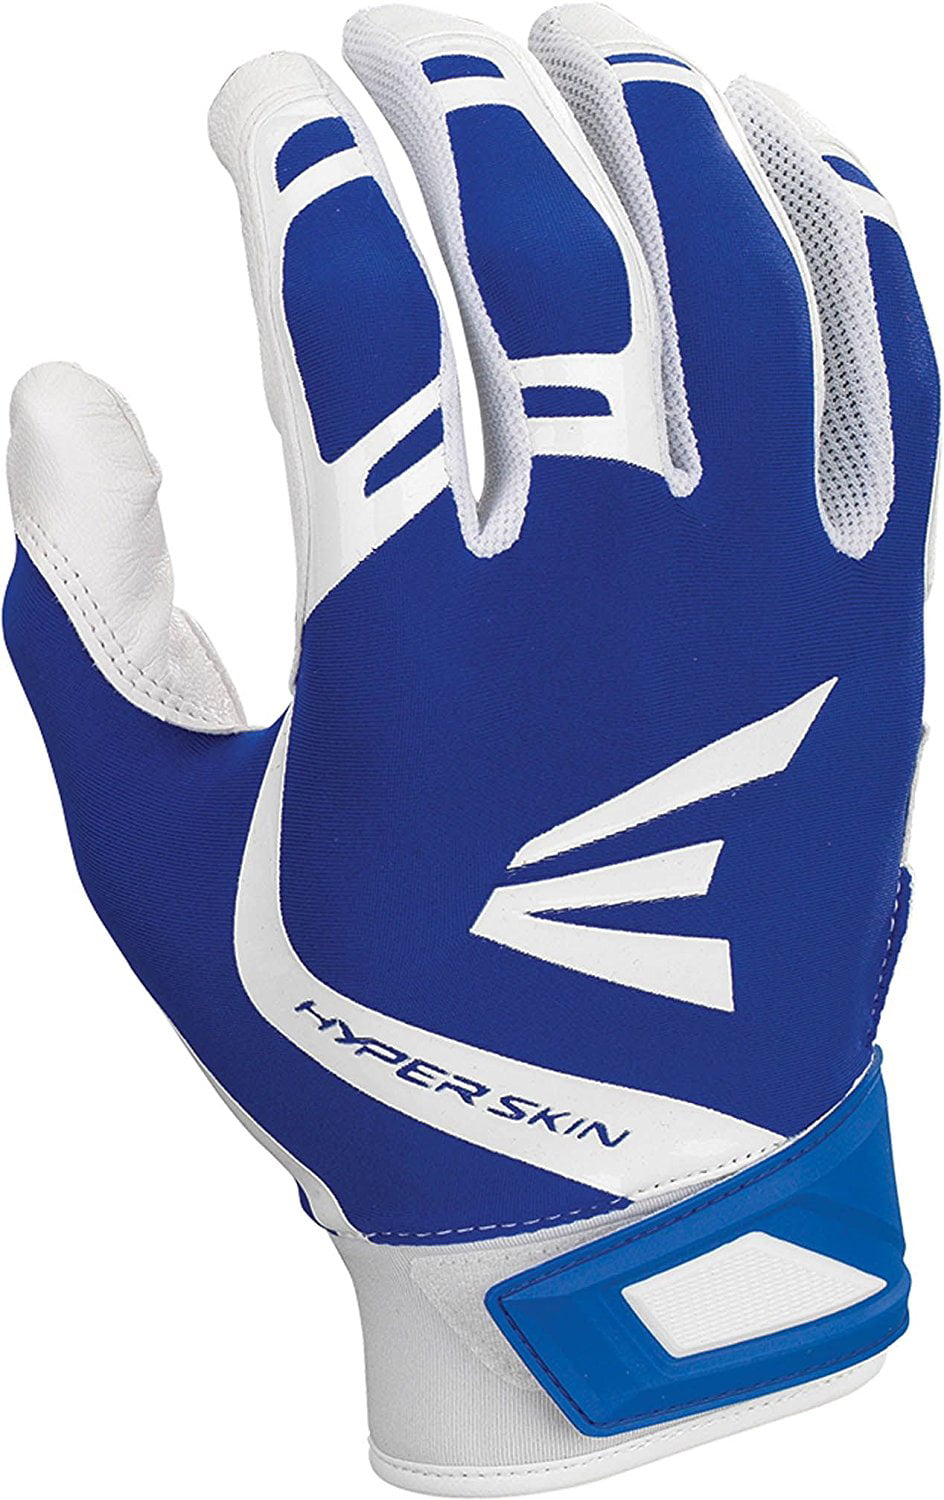 VRS Pad Reduces Vibration & Blisters Comfort Neoprene Strap Baseball Softball Pair Flexible Lycra Easton VRS Power Boost Batting Glove Royal/Grey Adult 2020 Large Tacky Palm 